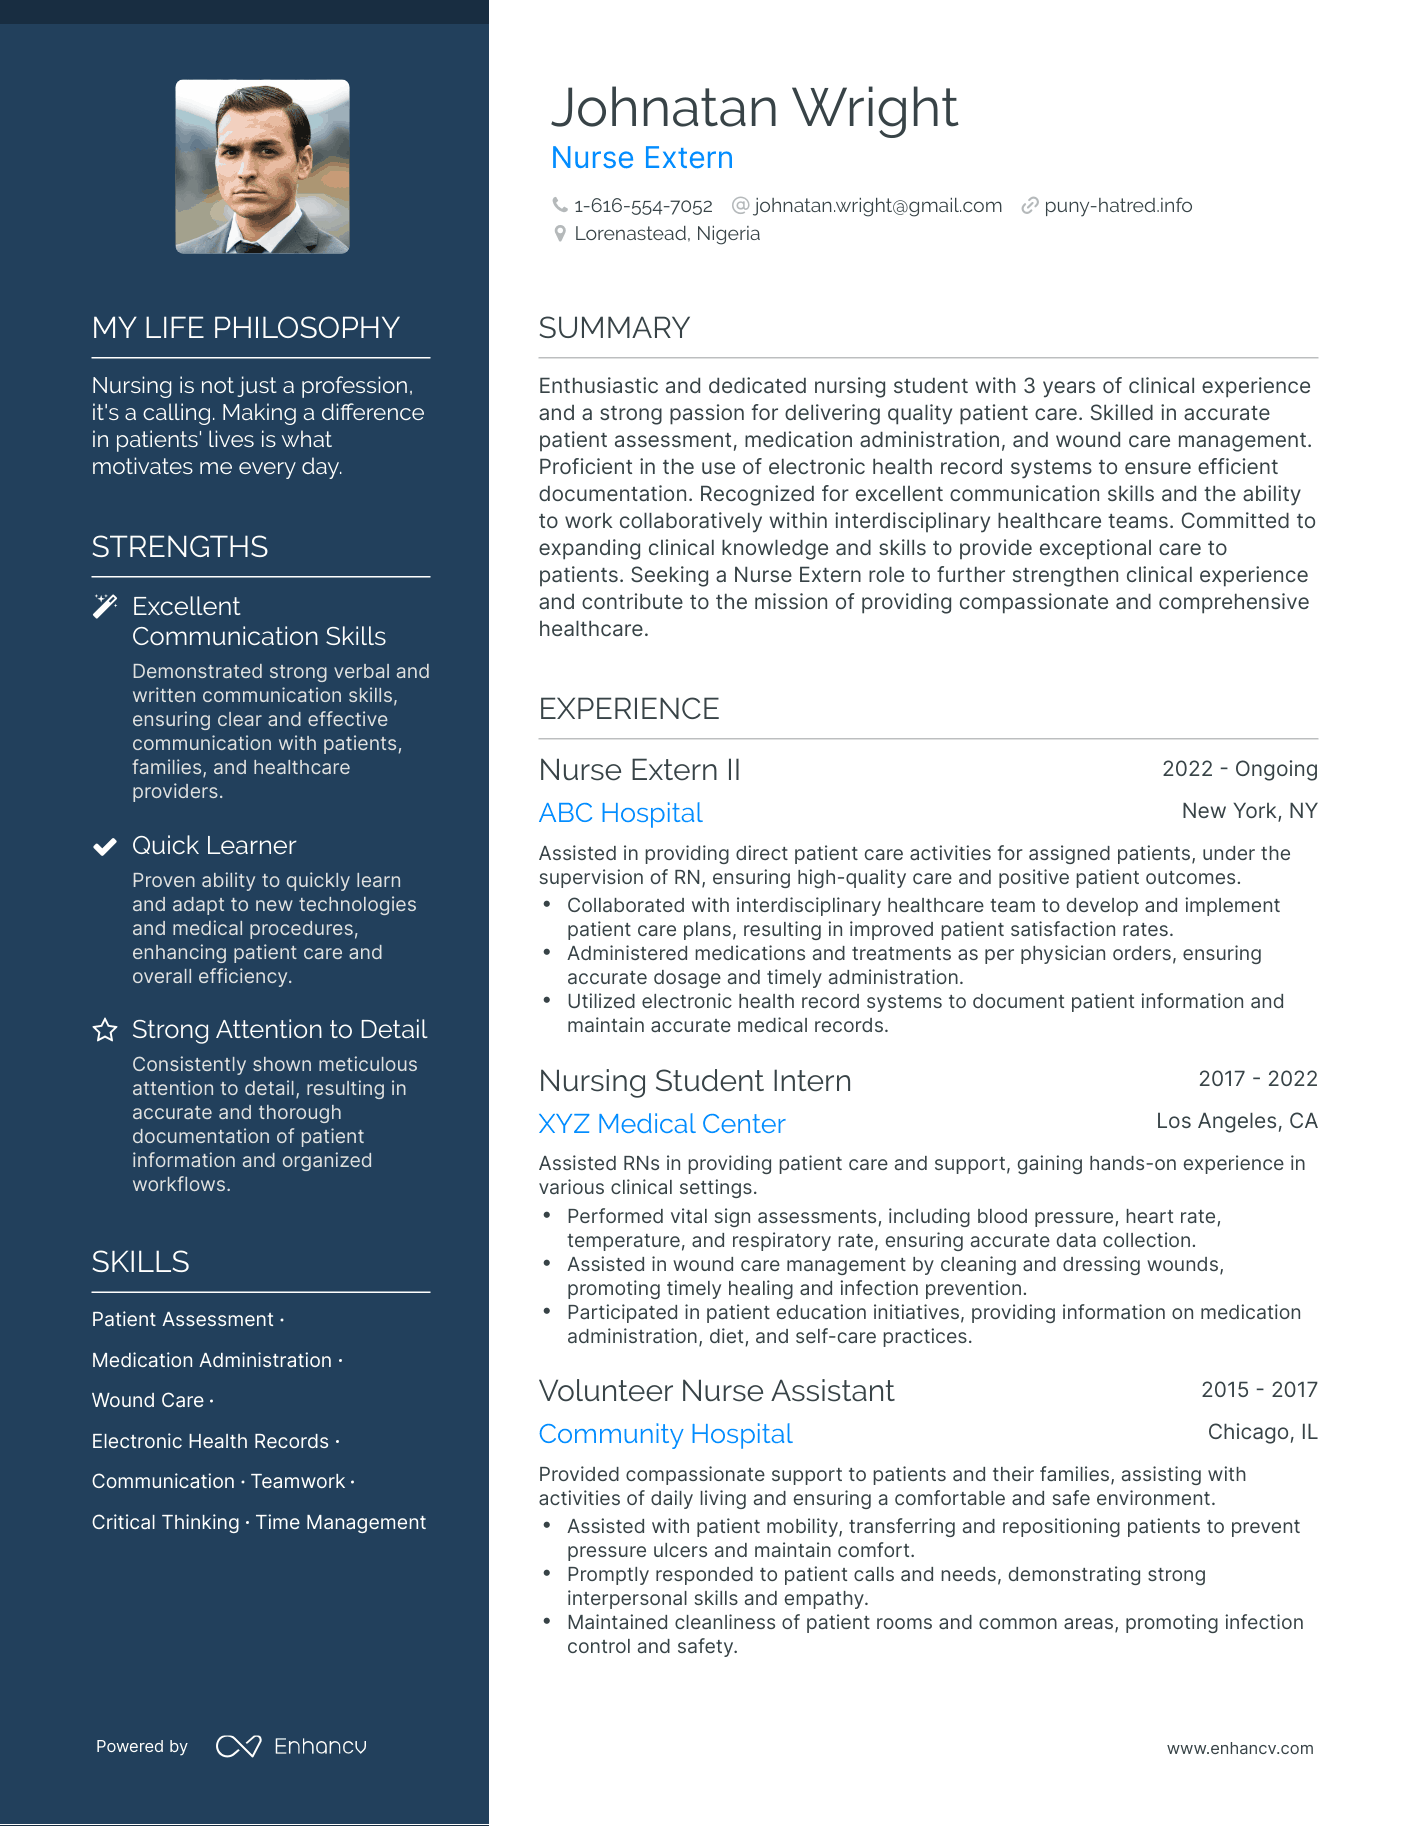 Nurse Extern resume example